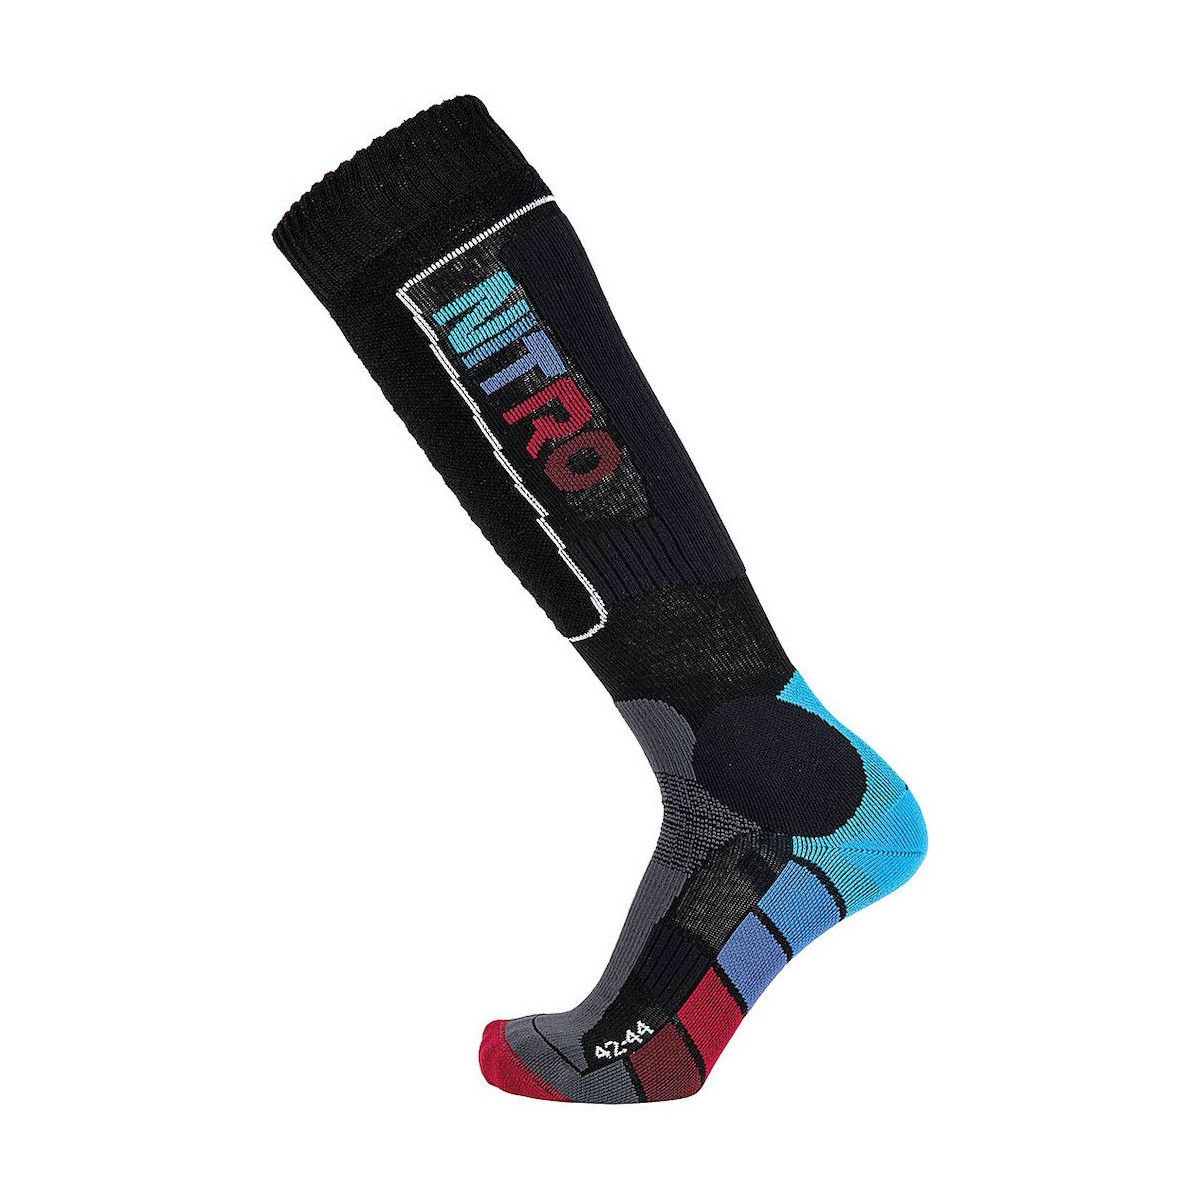 NITRO CLOUD 8 socks - black/blue/red